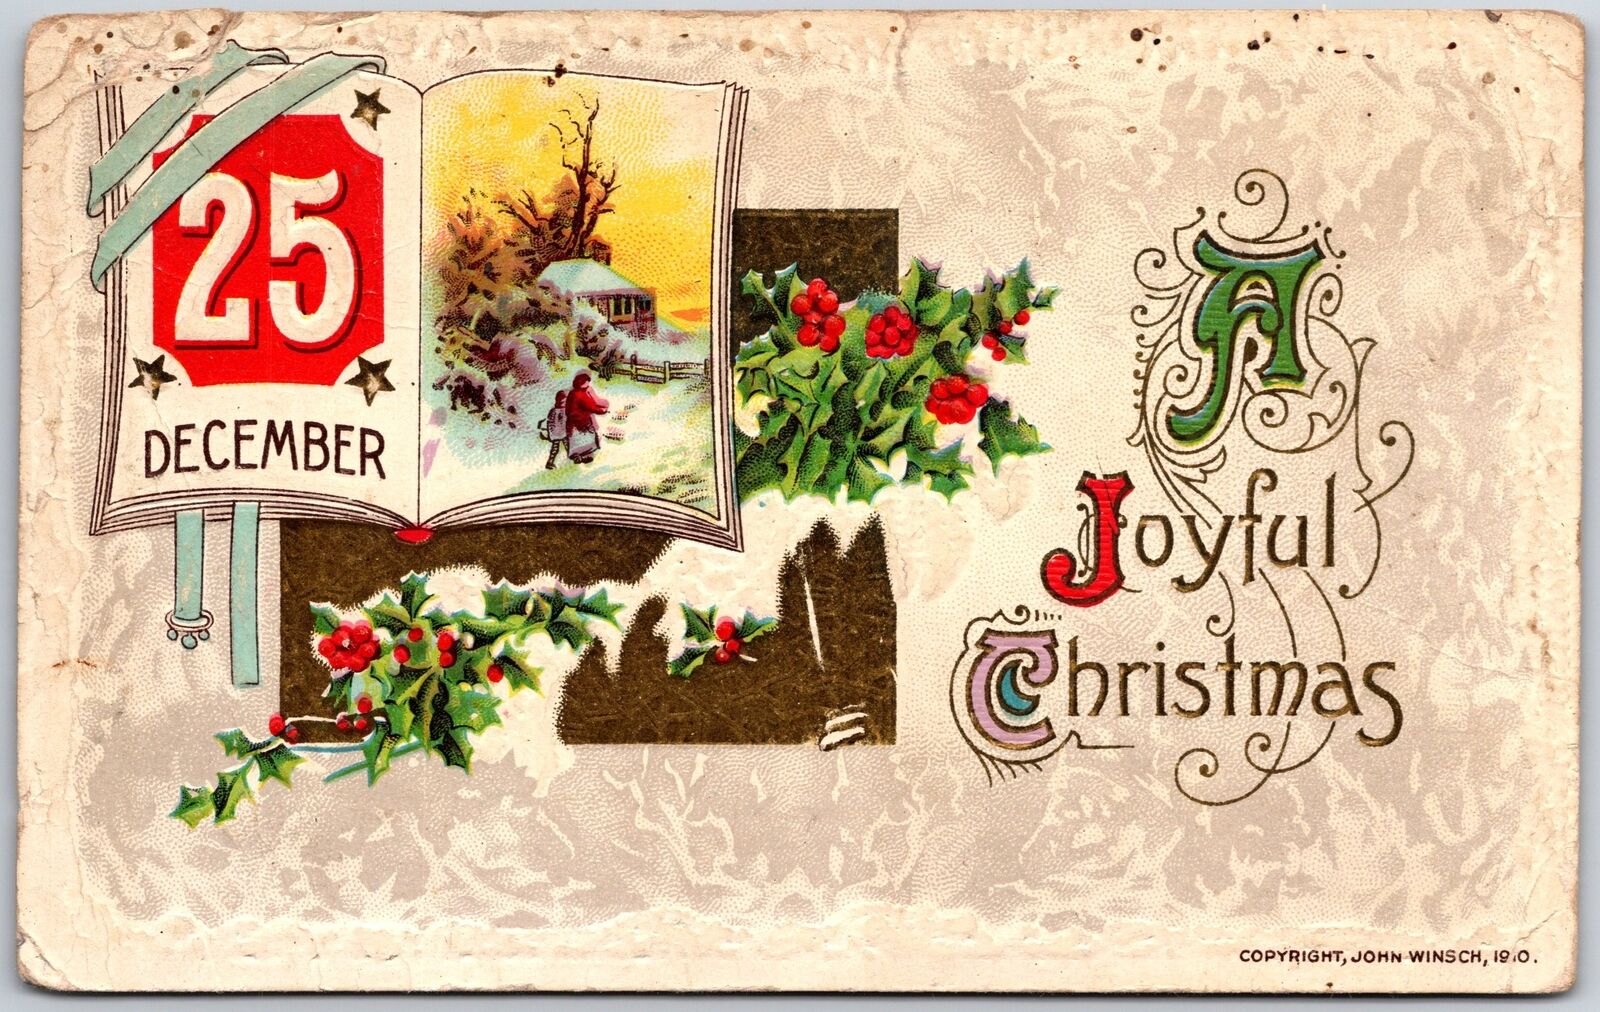 1911 Joyful Christmas Holy Leaf Cherry  December 25 Book Posted Postcard